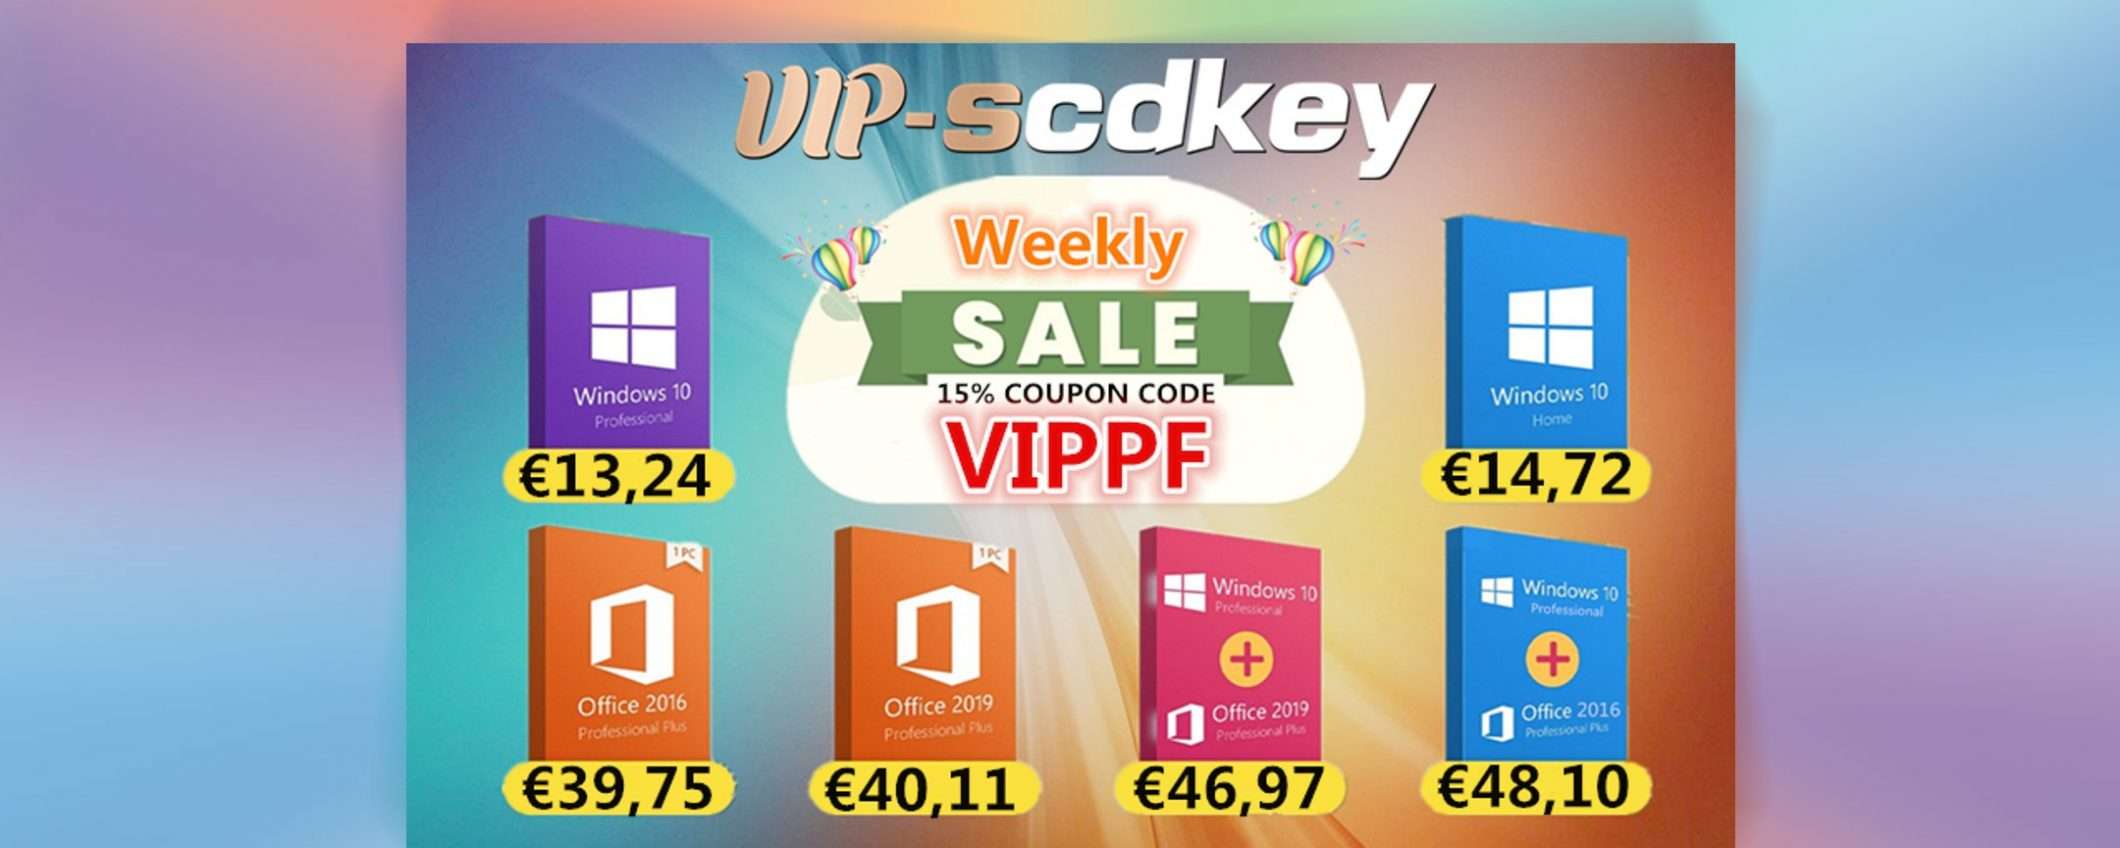 Offerte VIP-SCDkey: Windows 10 PRO €13 e Office 2019 €46!